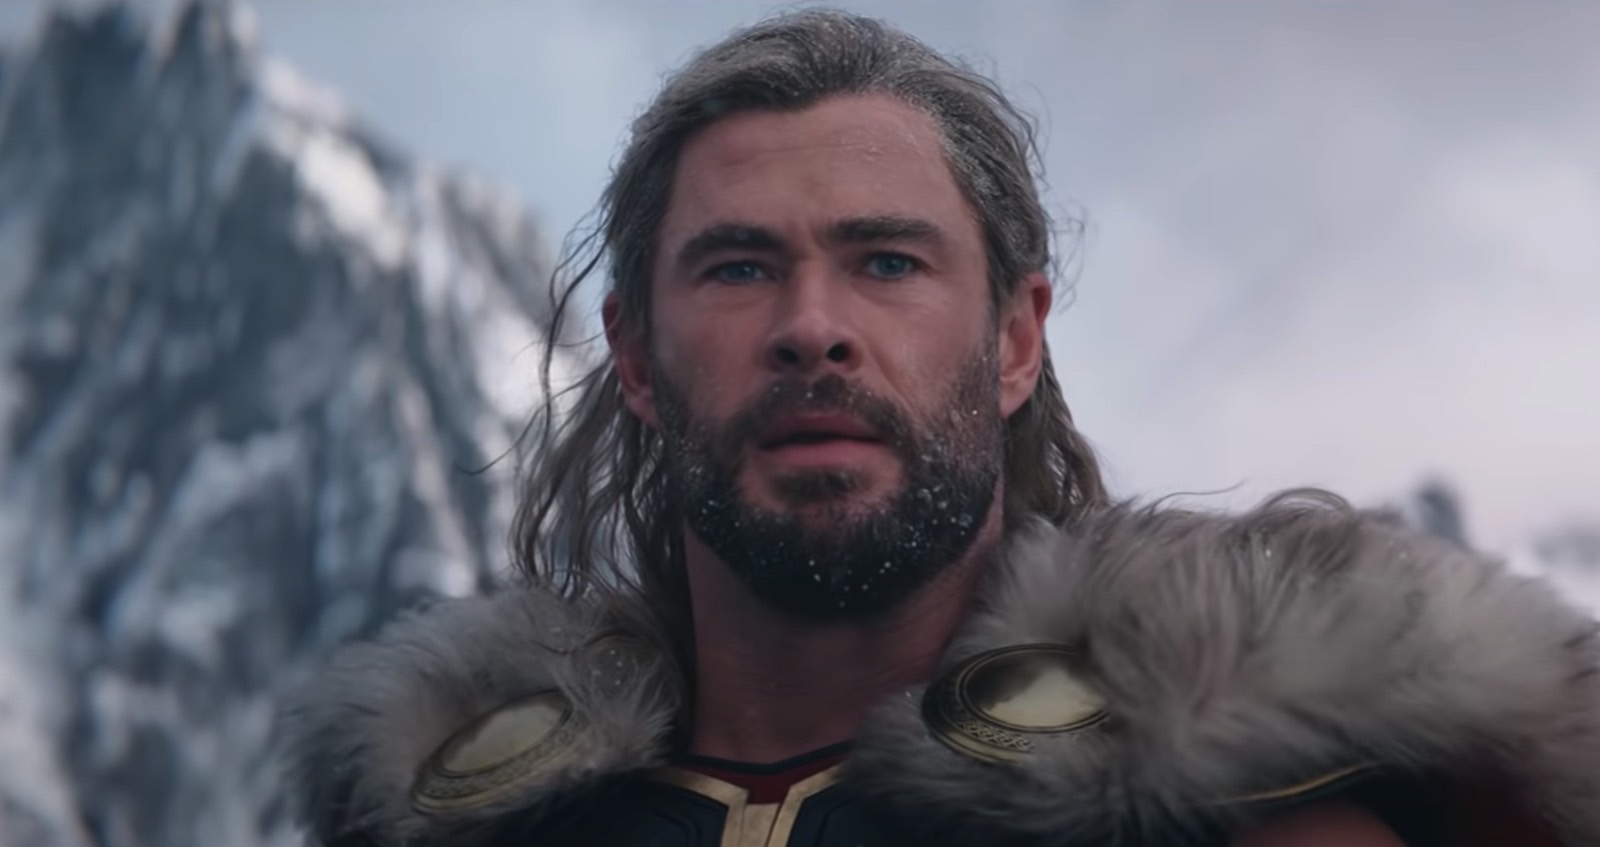 Chris Hemsworth teases an ending for Thor’s MCU tale